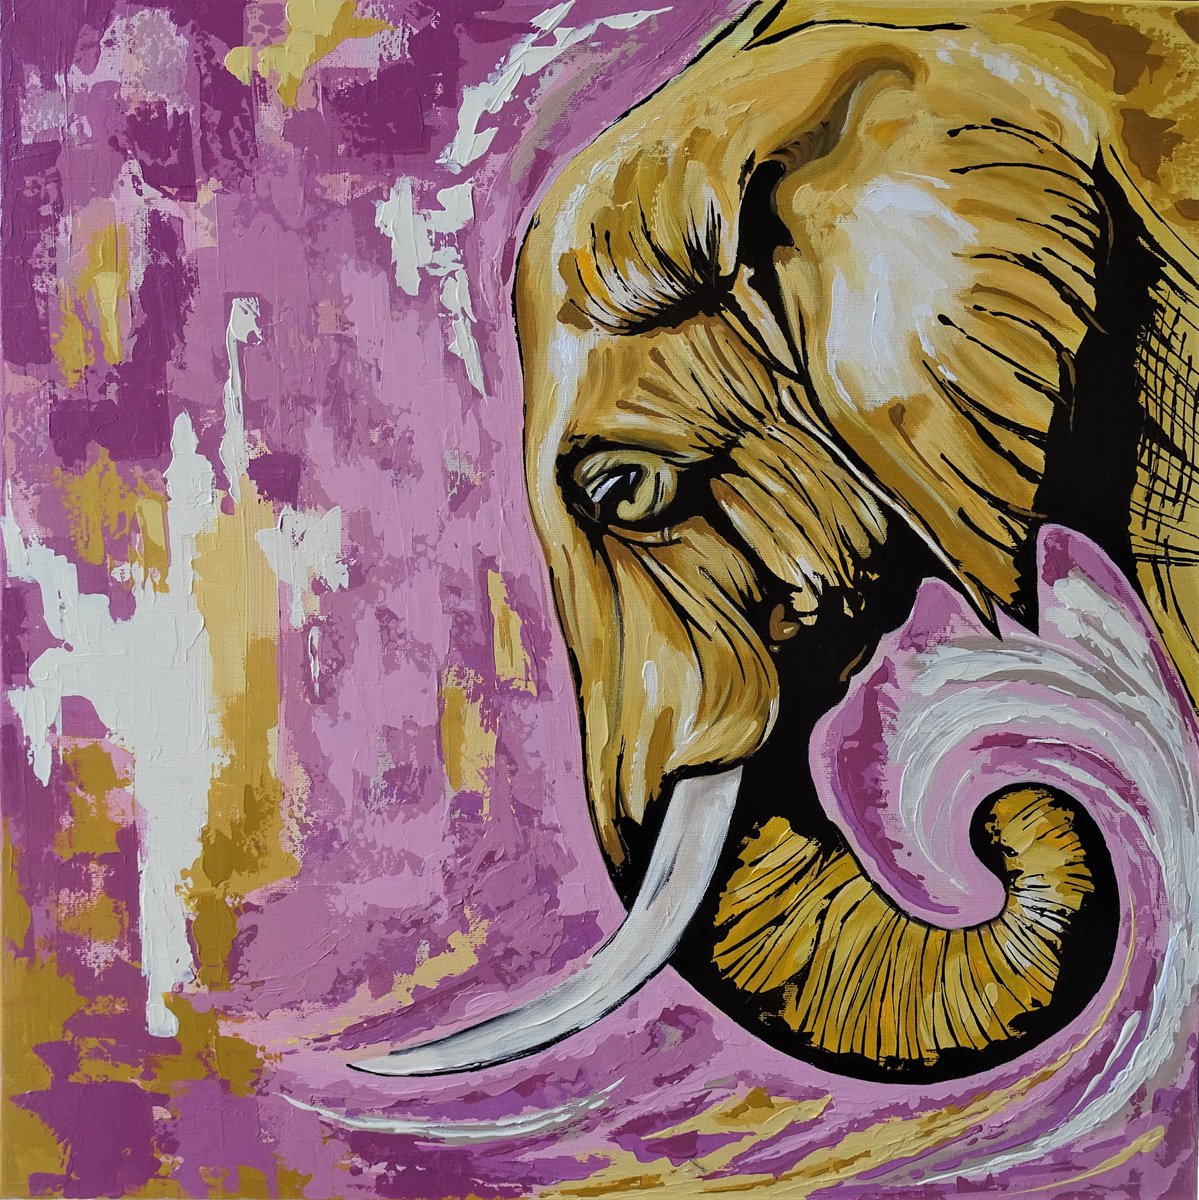 Abstract elephant by Livien Rzen